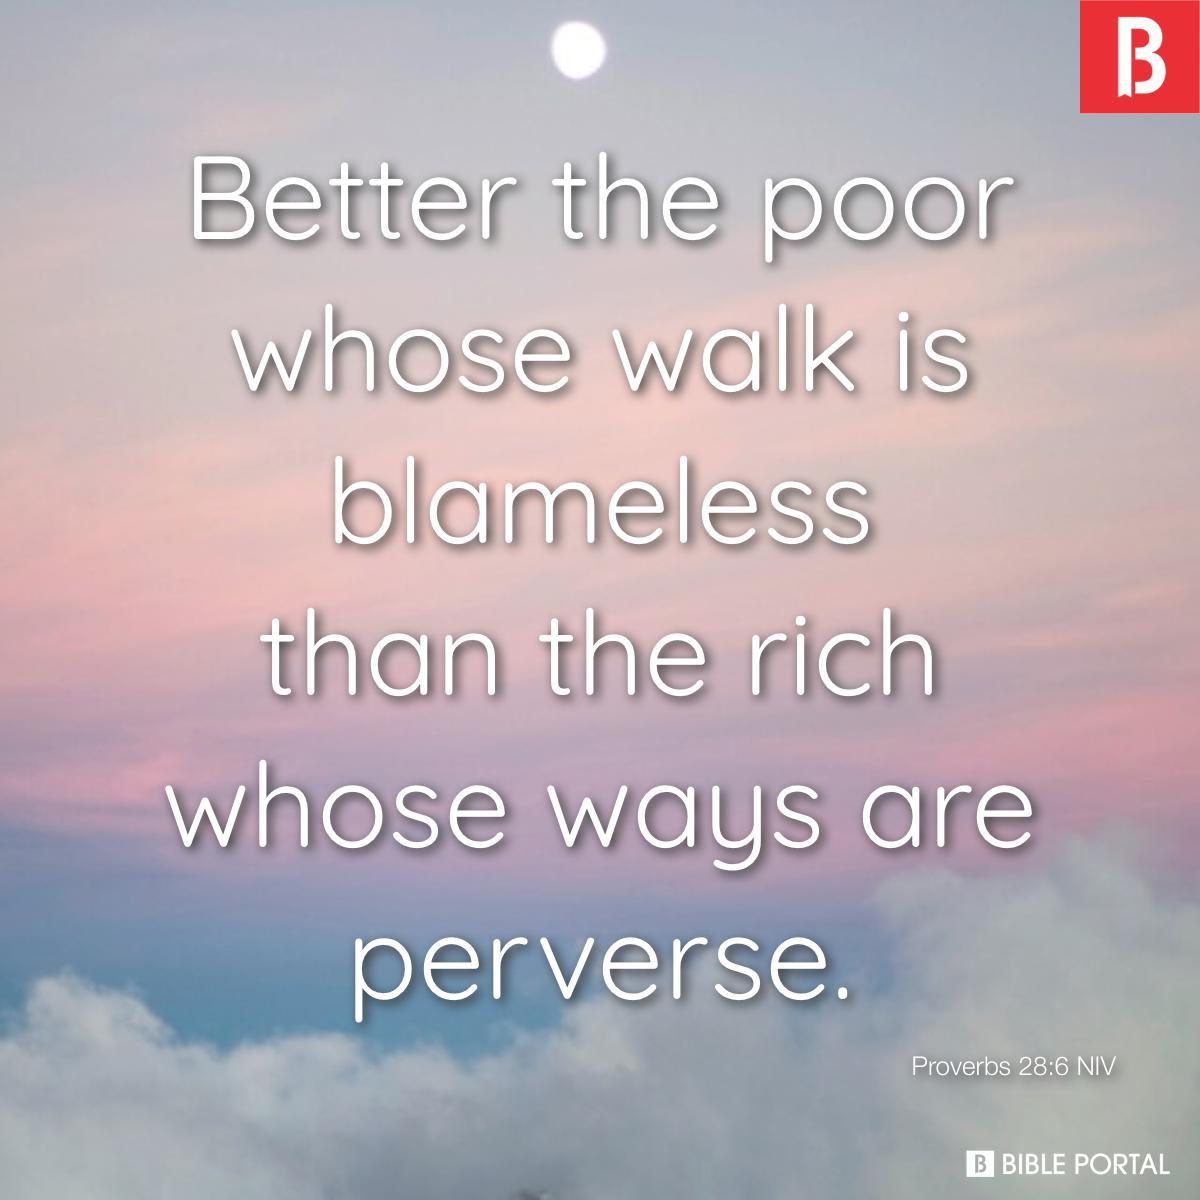 Proverbs 28:6 NIV